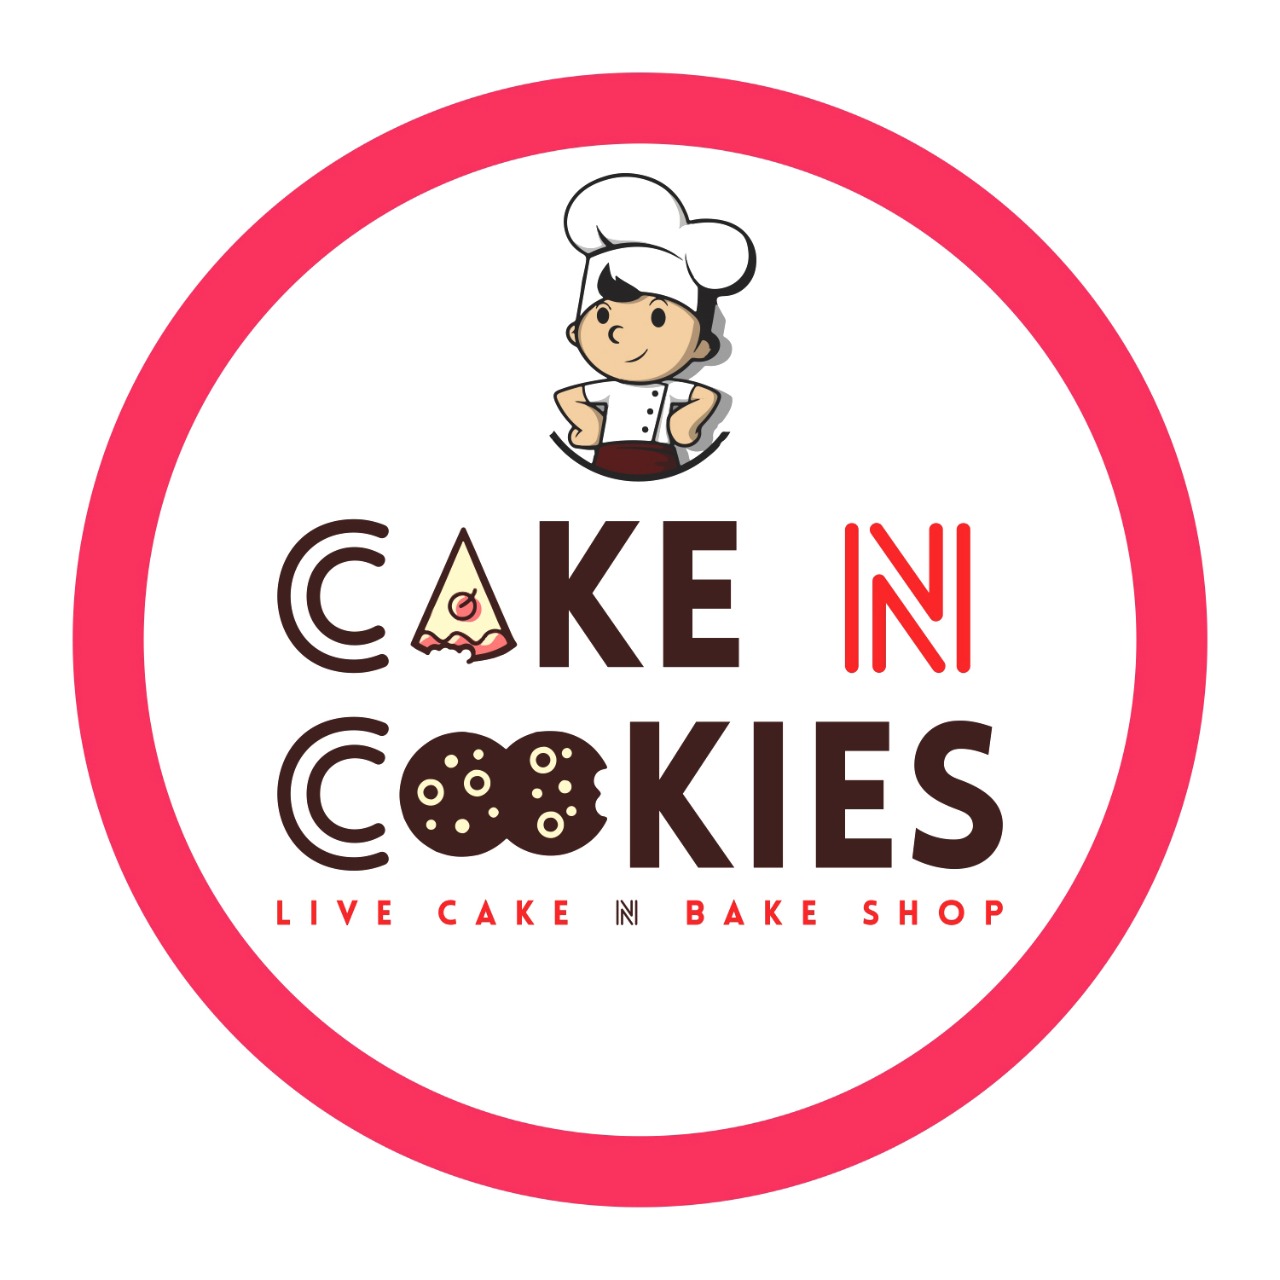 Cakes & Cookies